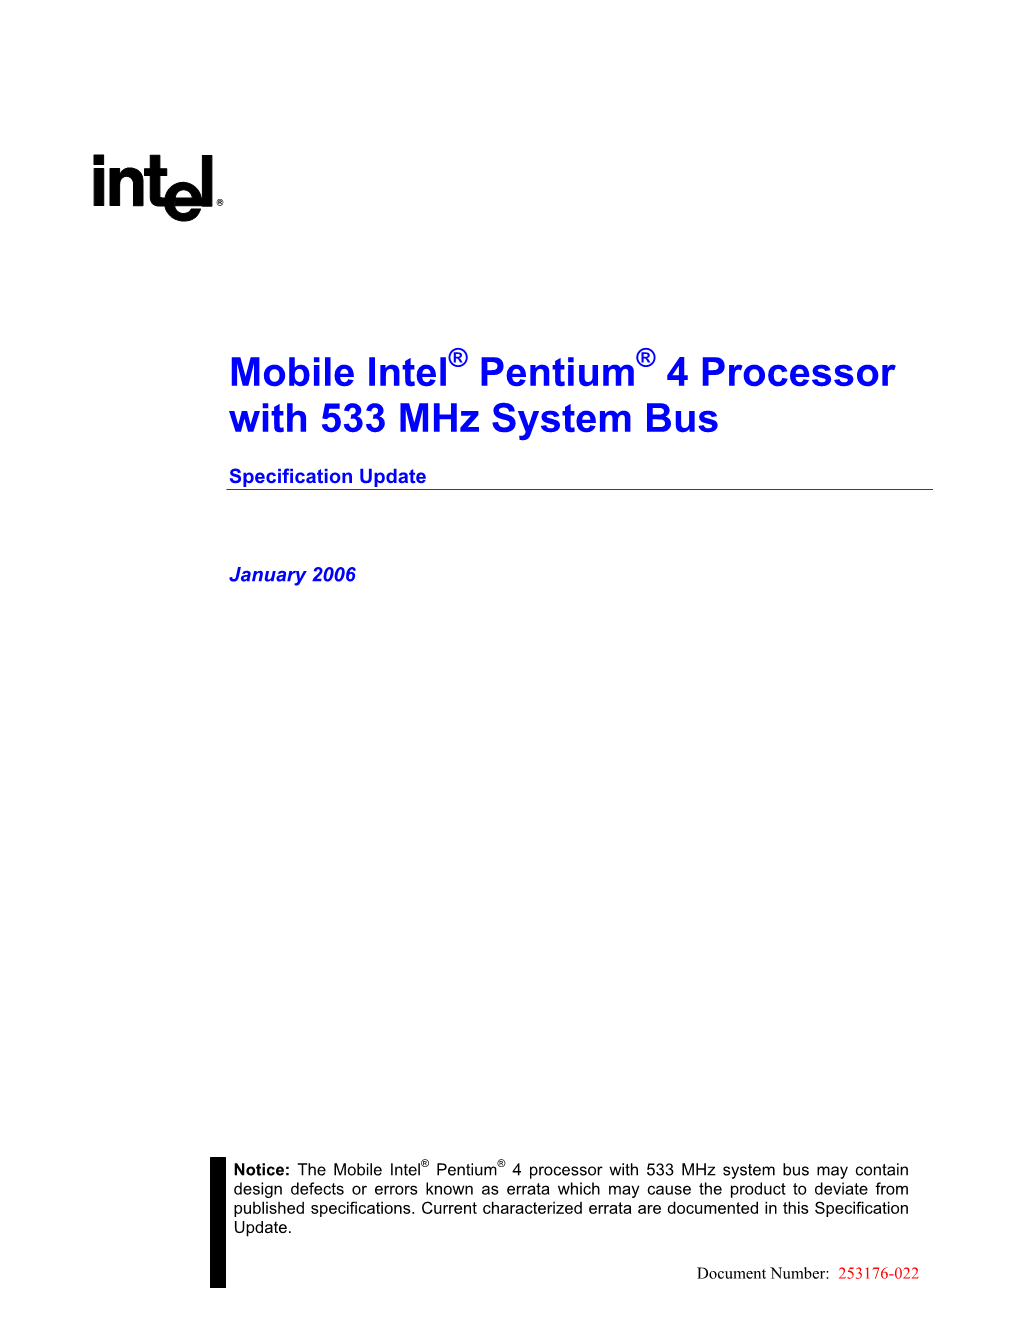 Mobile Intel® Pentium® 4 Processor with 533 Mhz System Bus